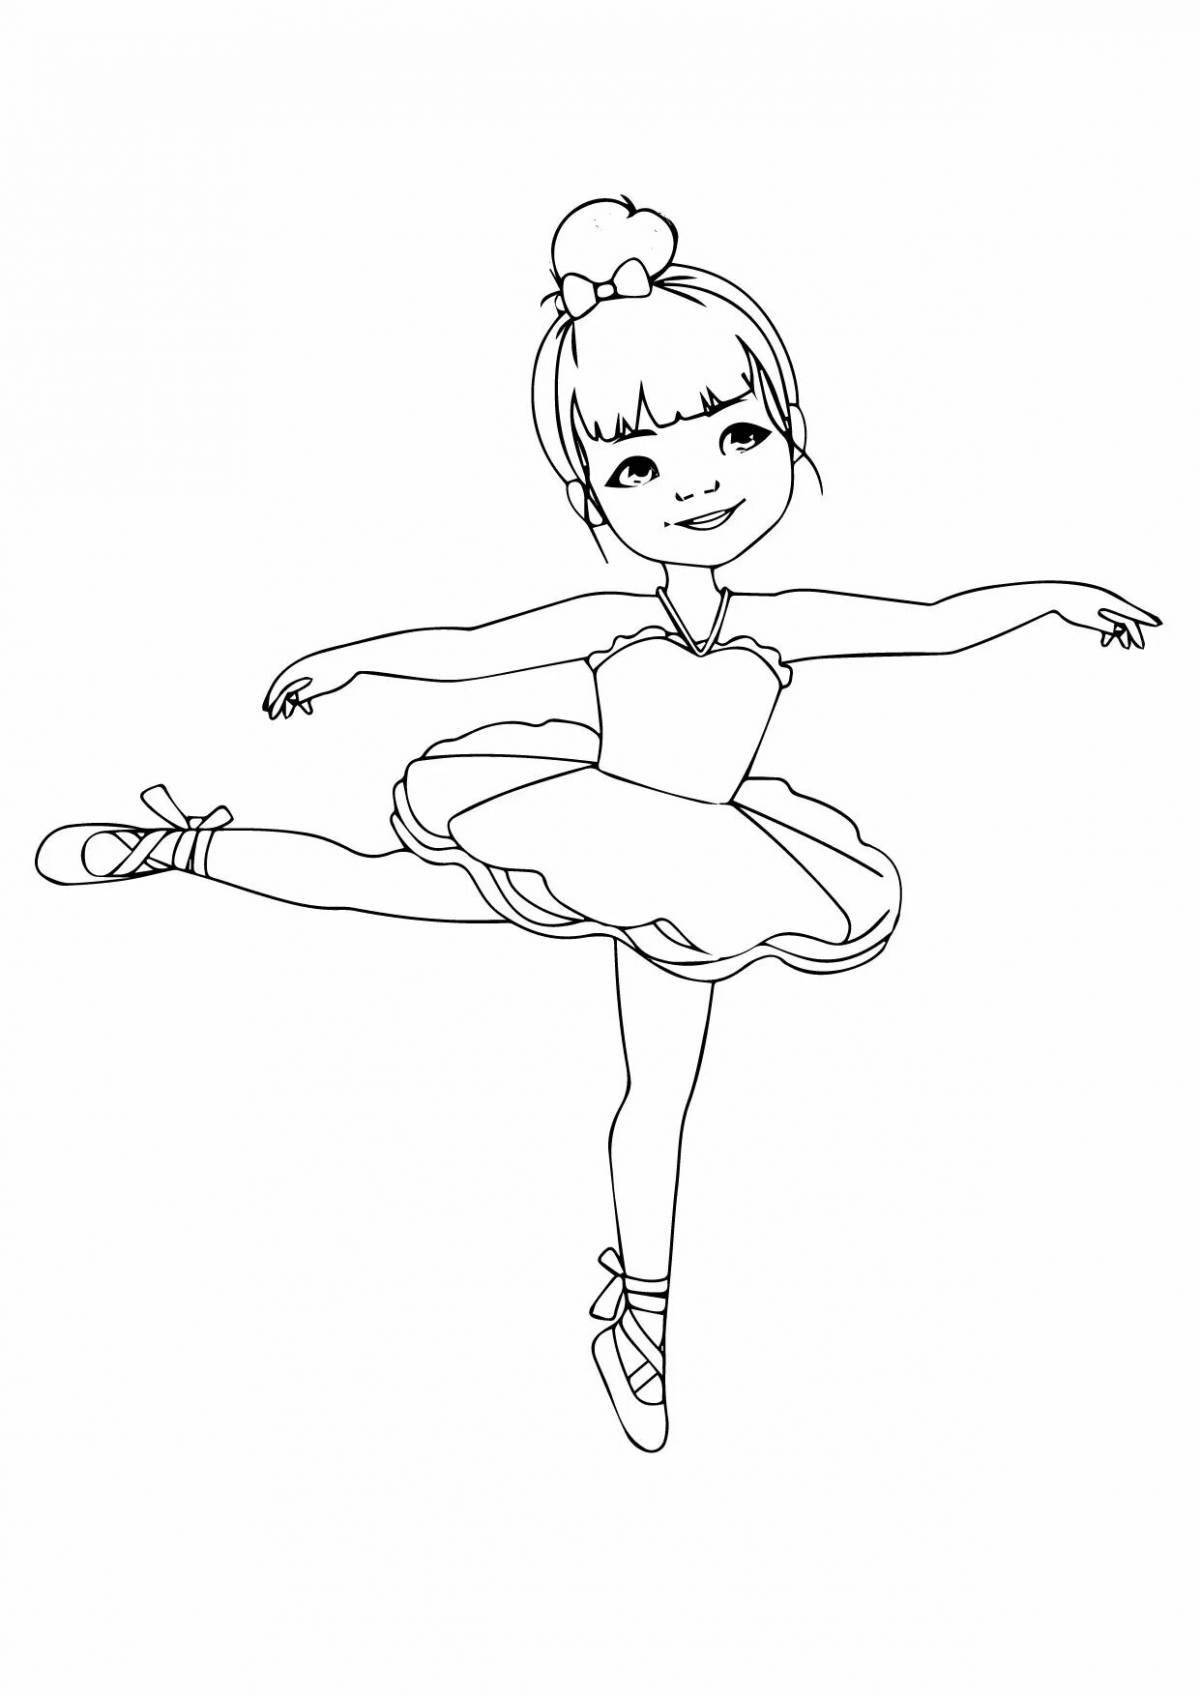 Fancy drawing of a ballerina